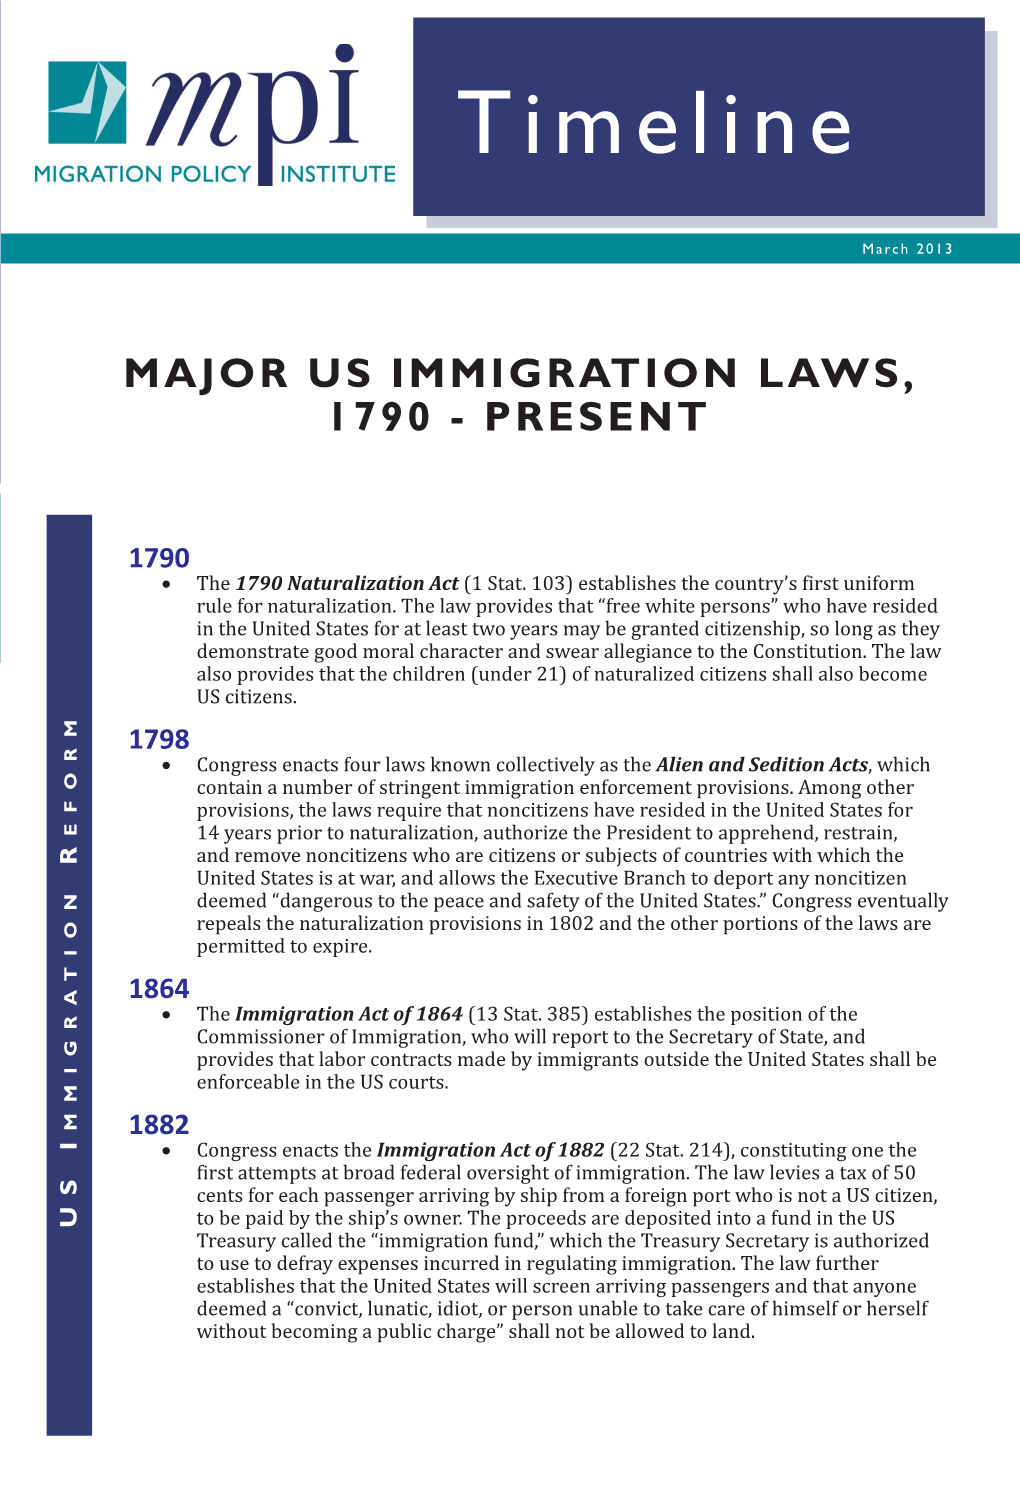 Major Us Immigration Laws, 1790 - Present